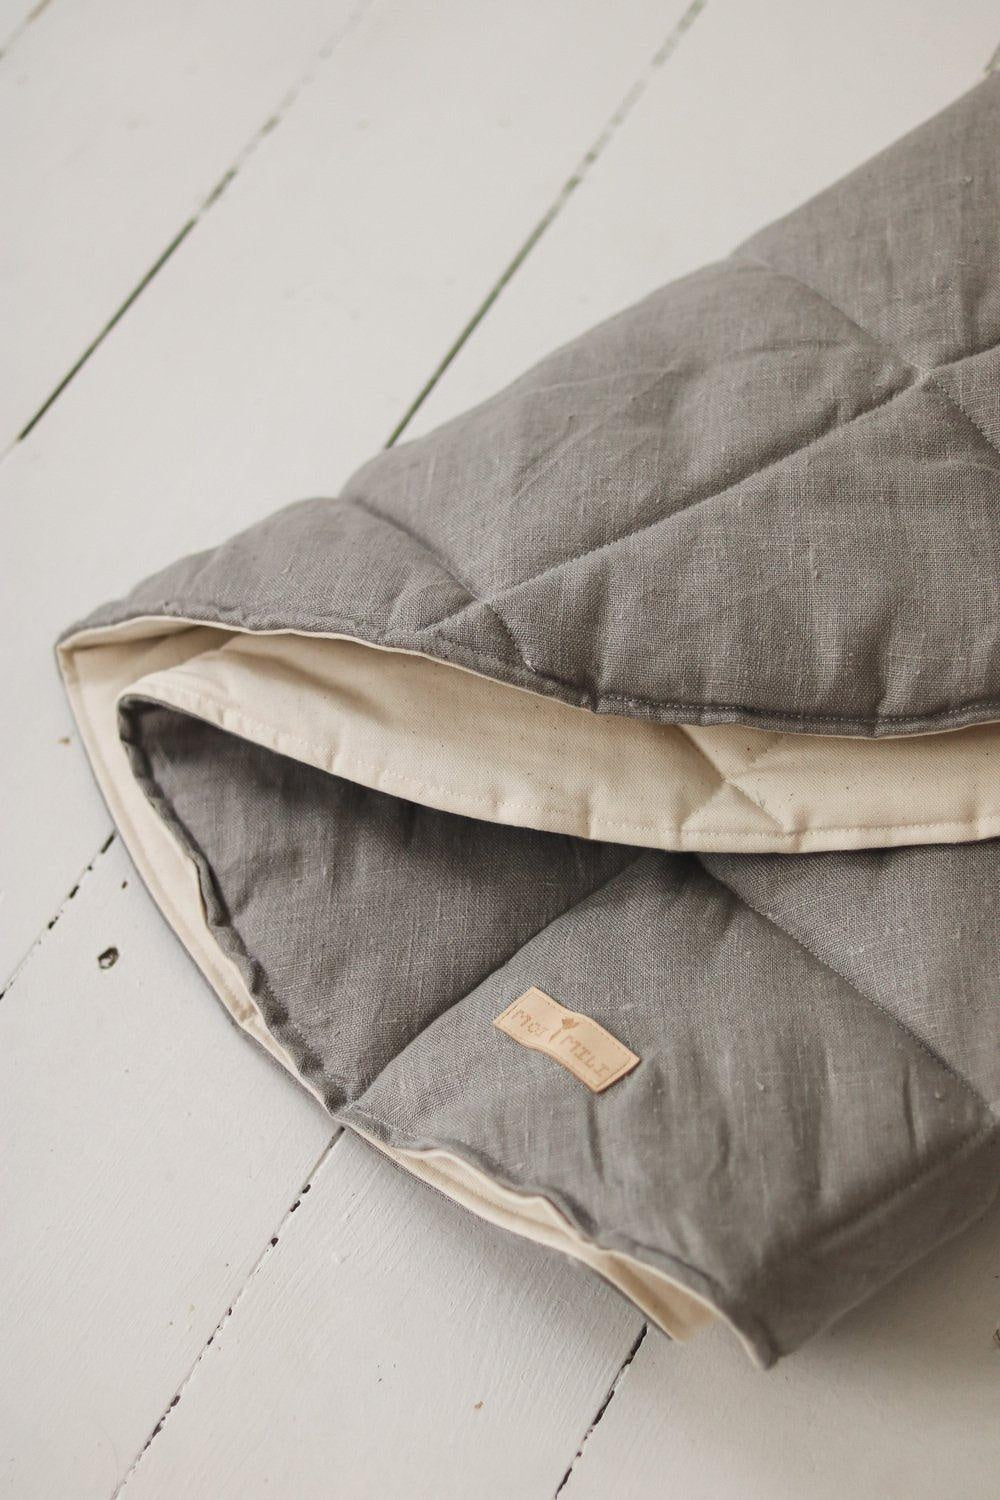 Teepee Tent “Beige” + "Grey Linen" Round Mat Set